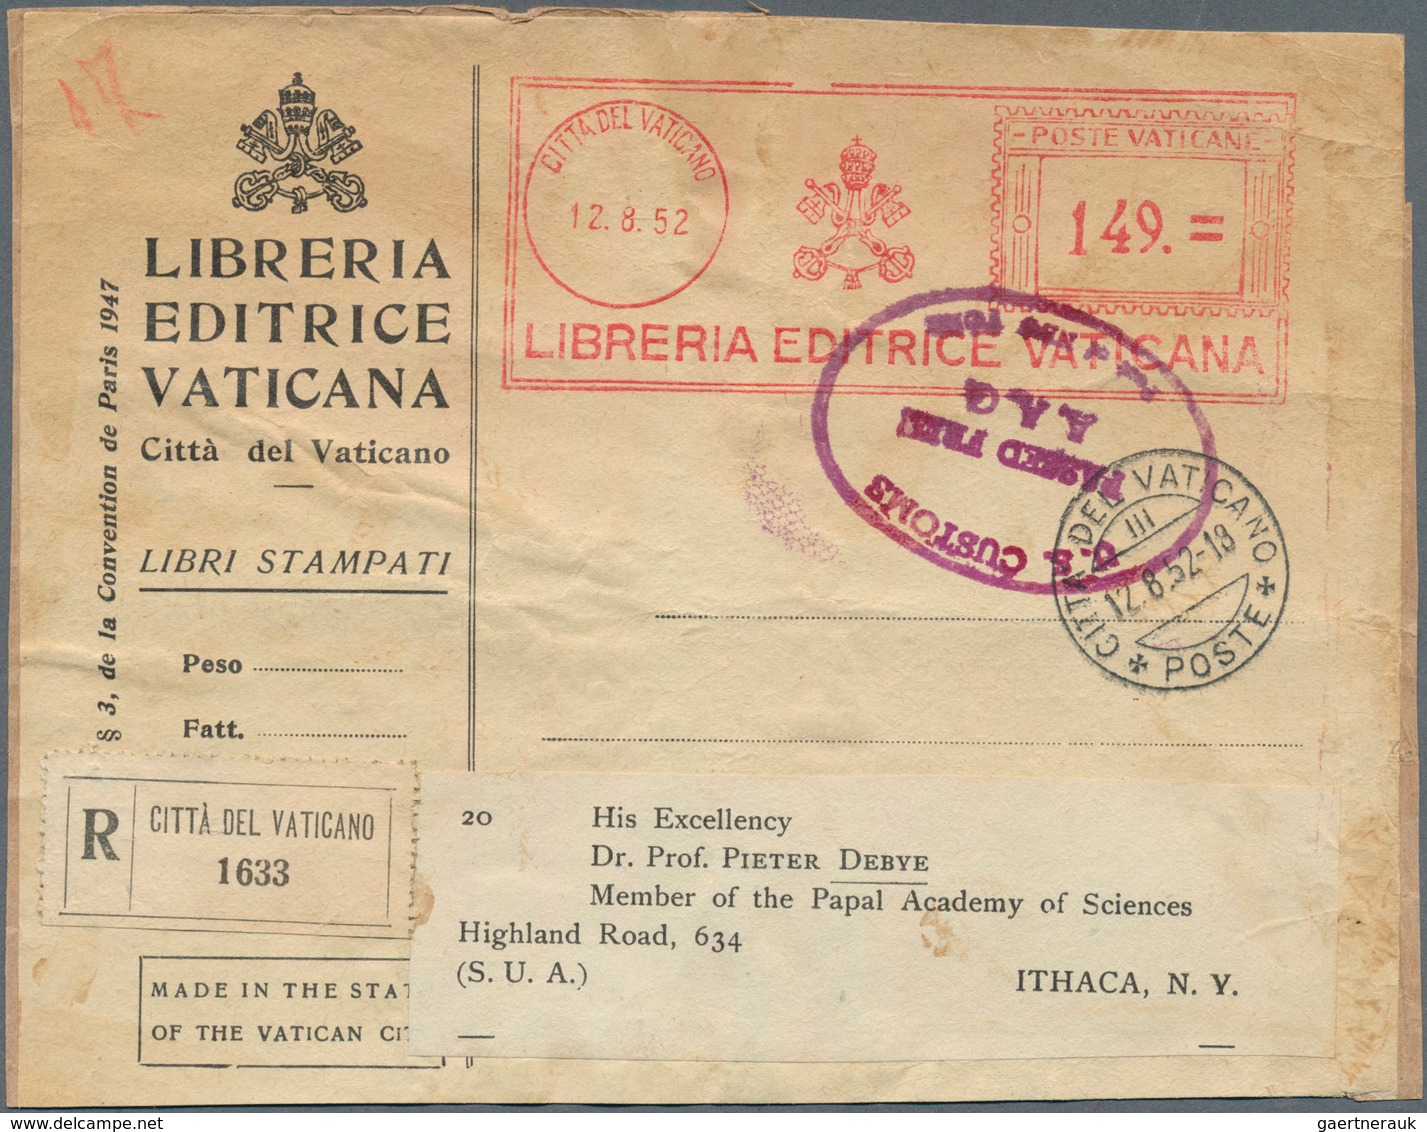 Vatikan: 1952, 149 Lire Meter Stamp LIBRERIA EDICTRICE VATICANA / CITTA DEL VATICANO, 12.8.52, On Ad - Unused Stamps